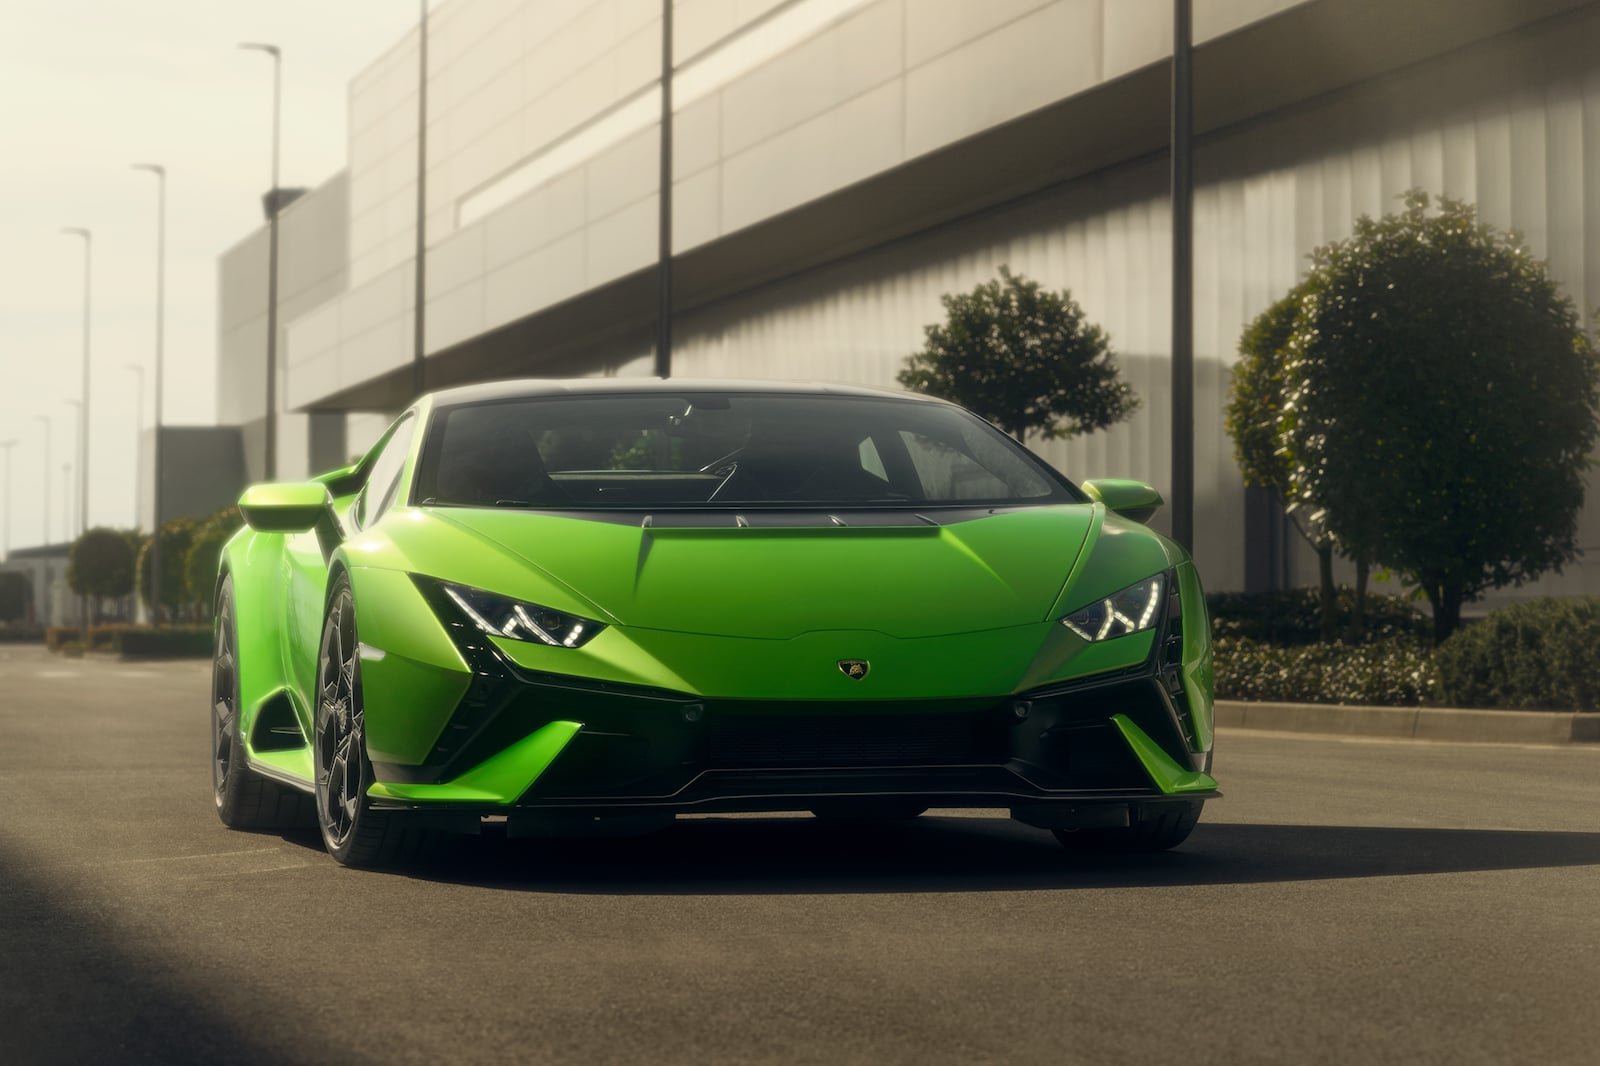 Lamborghini Terzo Millennio: specs, photos and news